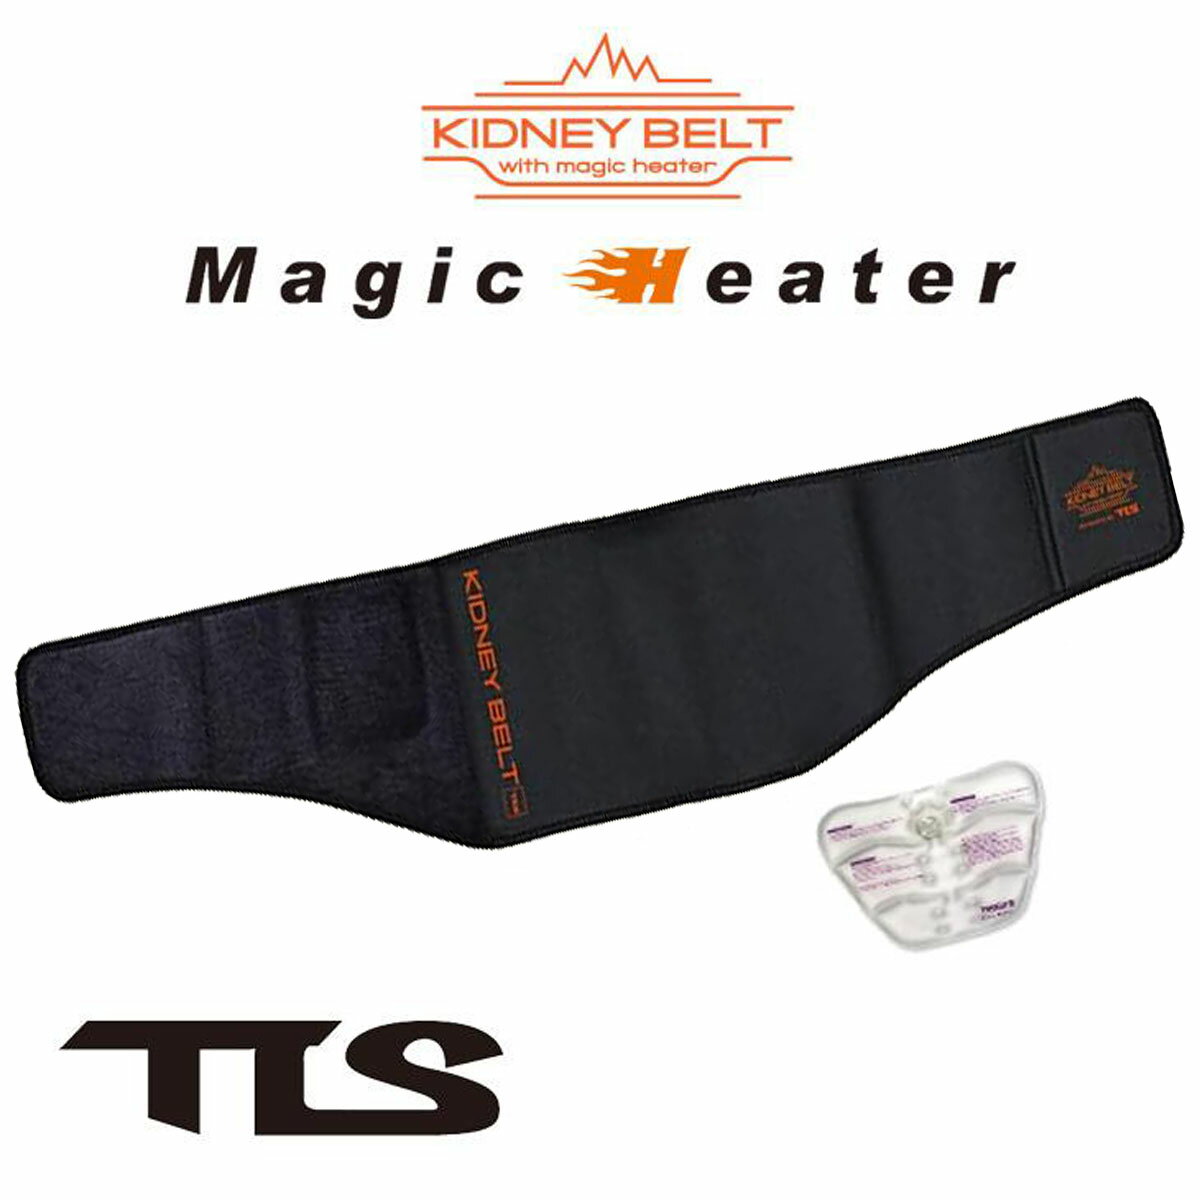 TOOLS TLS ツールス KIDNEY BELT キドニーベルト magic heater マジックヒーター付き 腰 冬用 暖か サポーター ベルト トゥールス 日本正規品